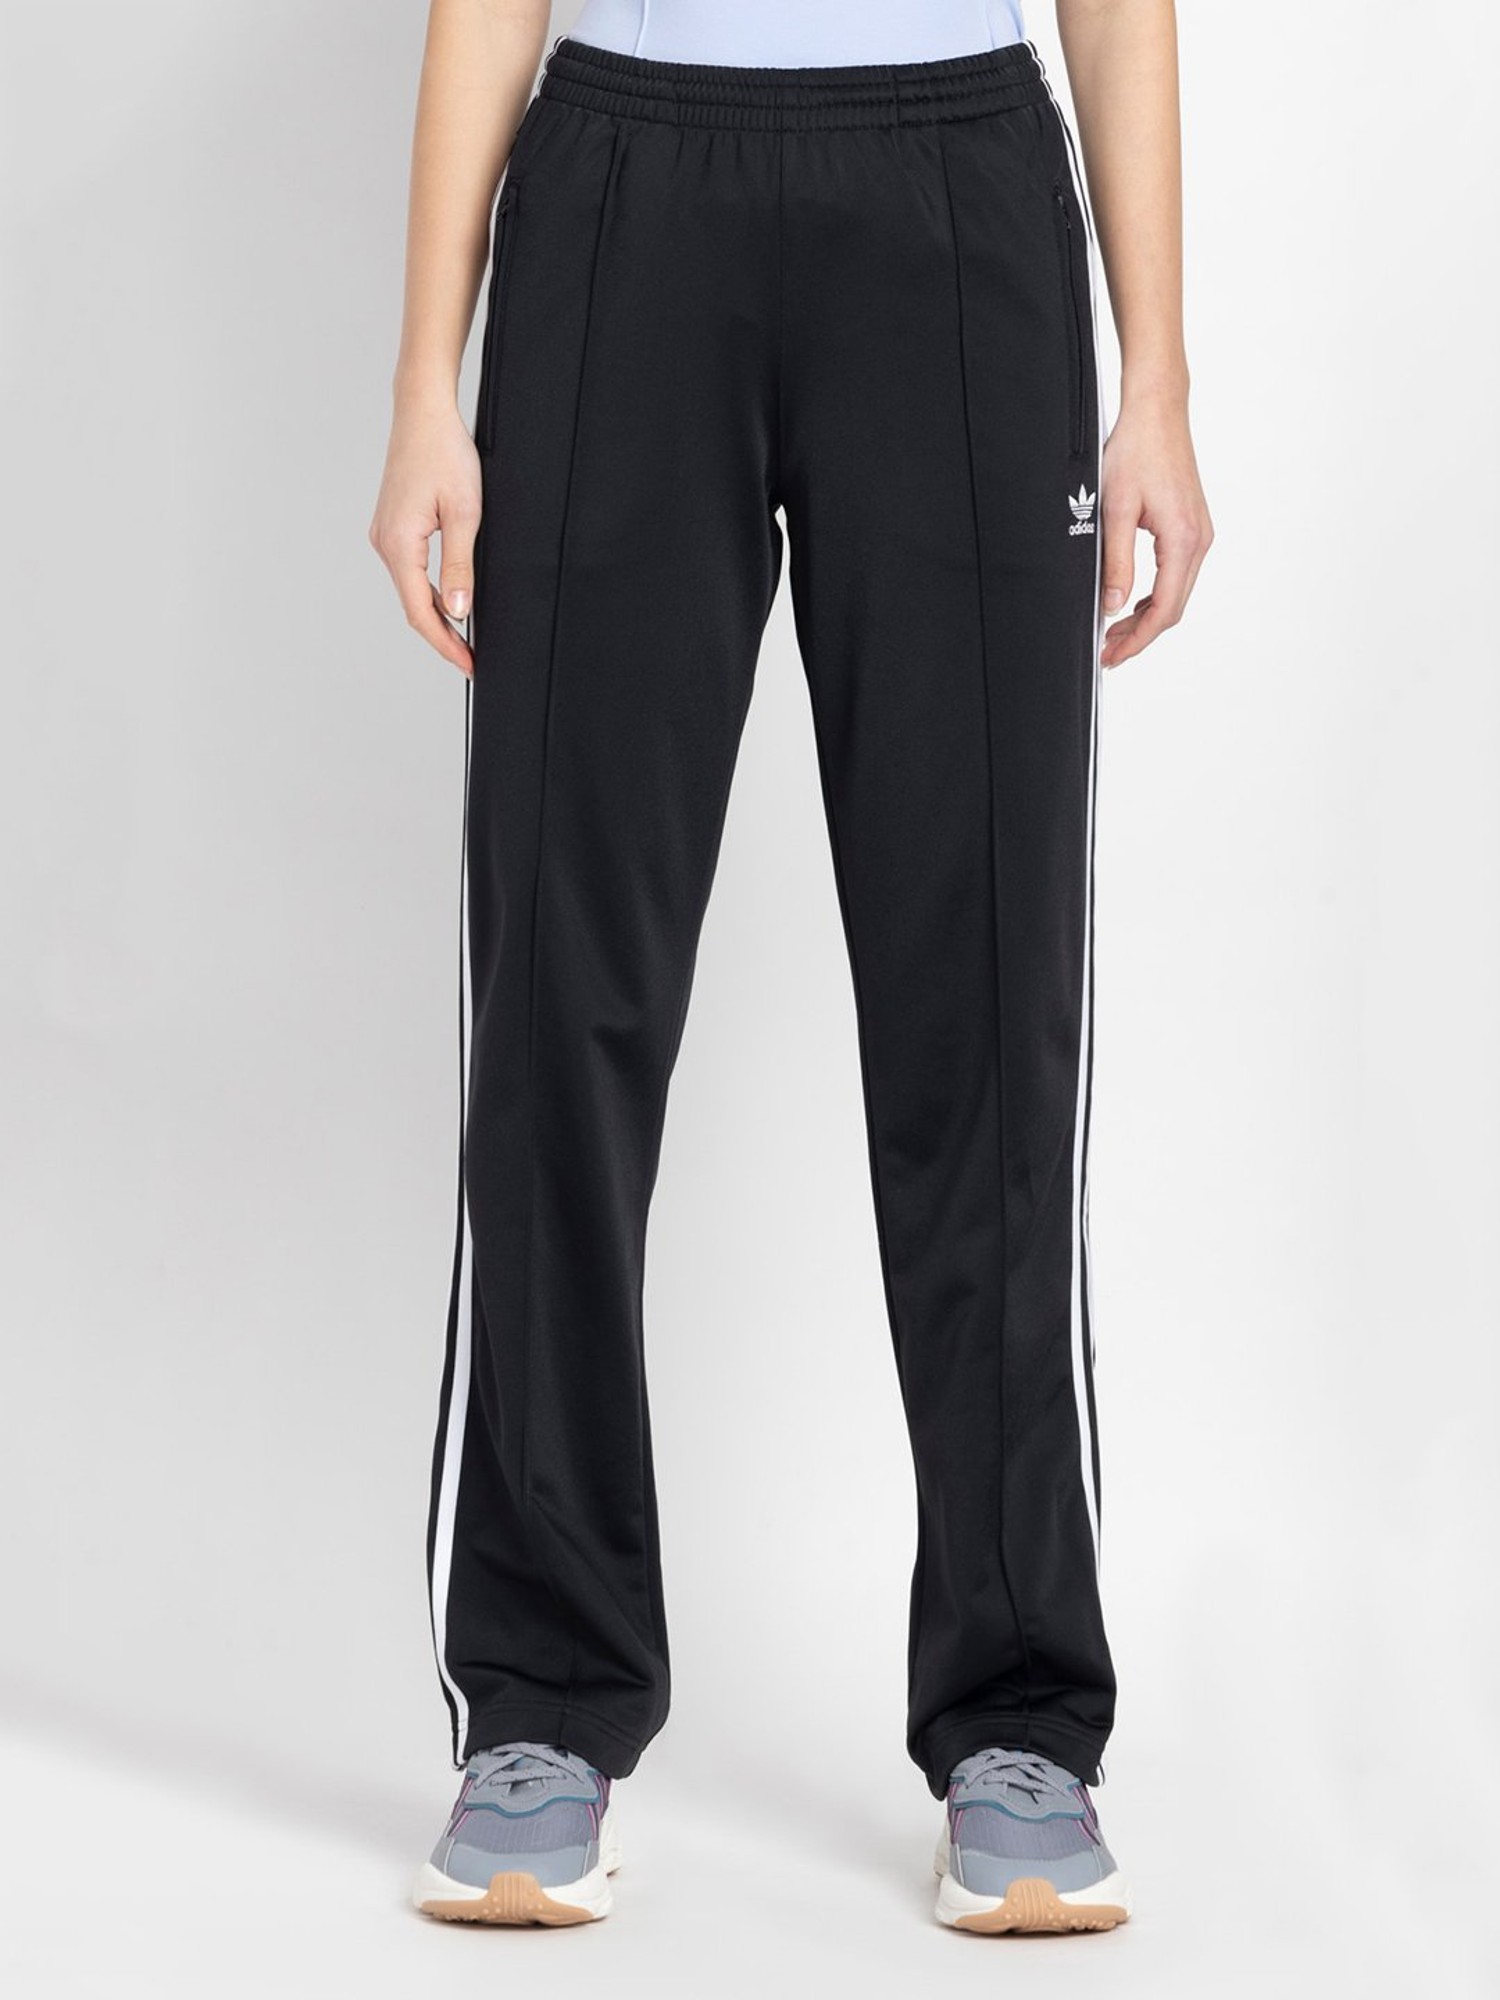 Adidas Women's Athletic Track Pants (GM3282_Black_Medium) : Amazon.in:  Fashion